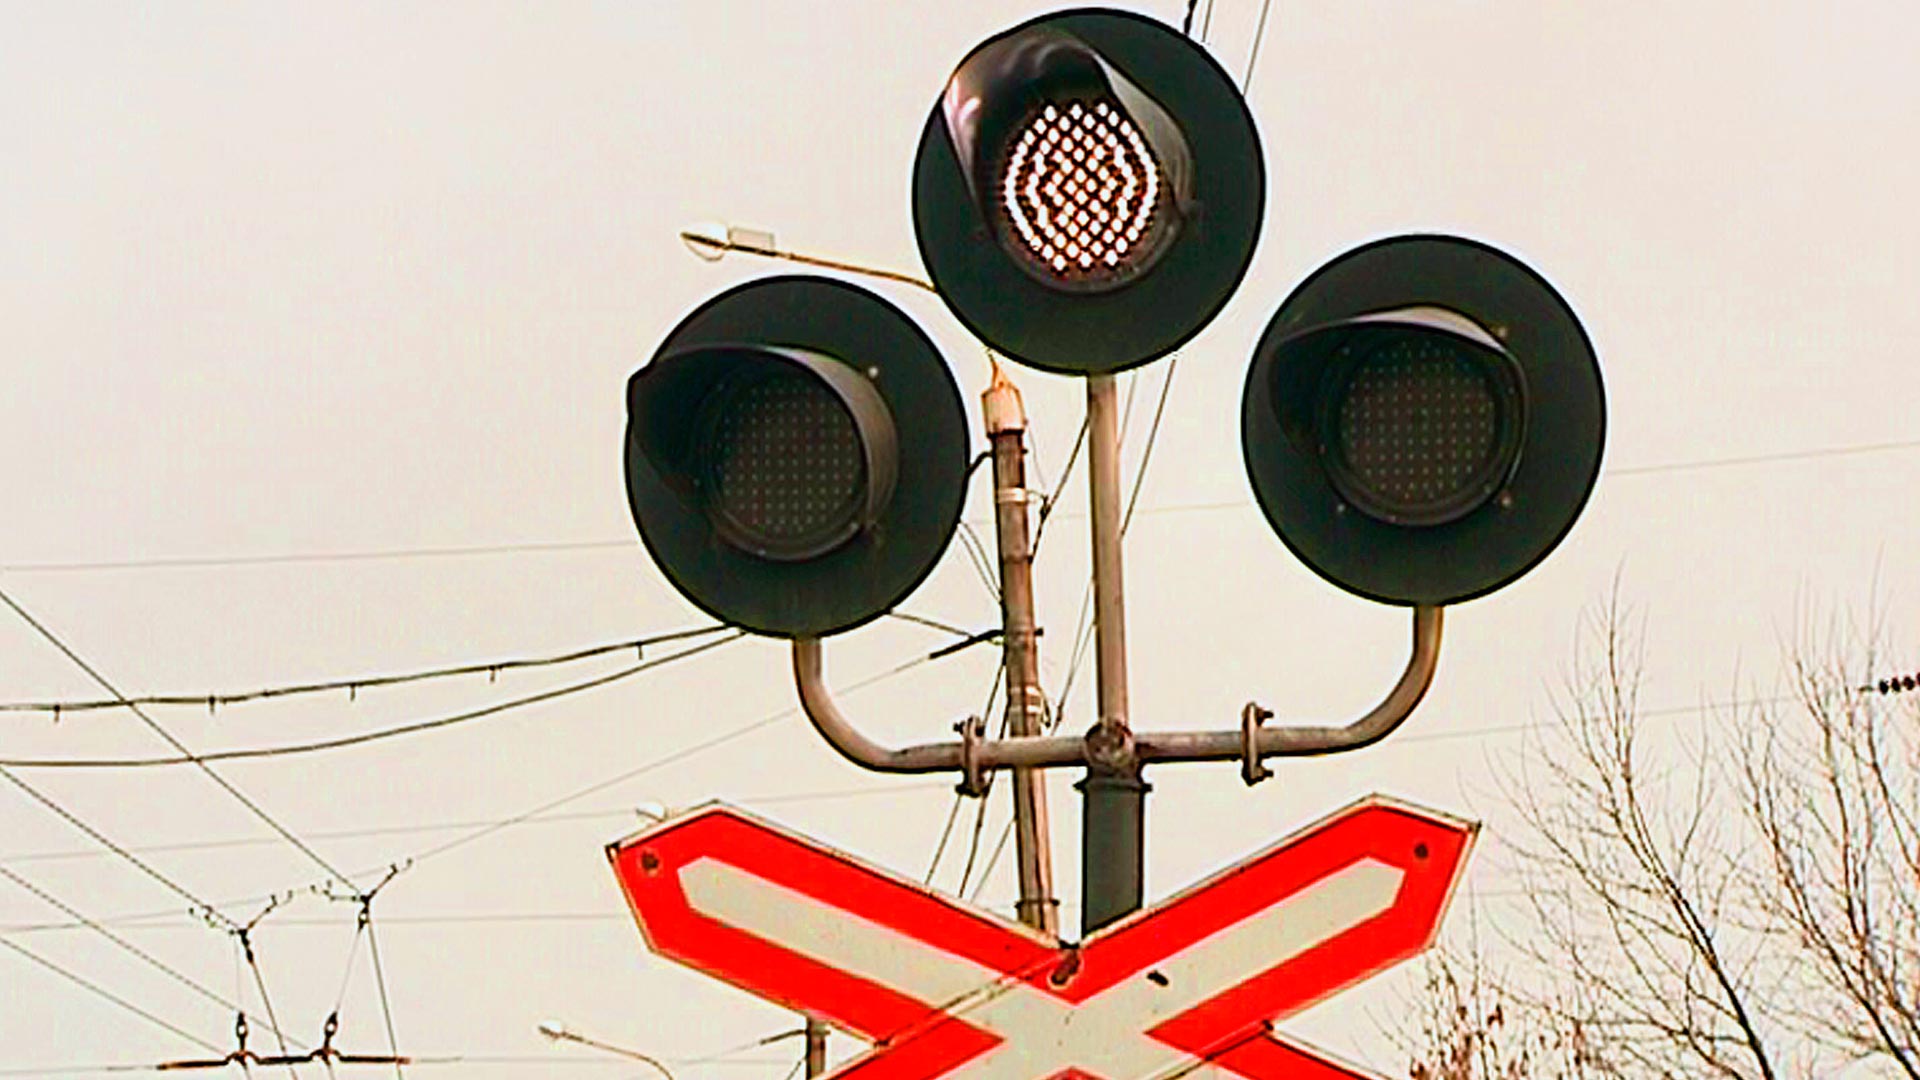 Лунно белый на жд. ЖД переезд светофор семафор. ЖД переездной светофор. Железнодорожный светофор сигналы. Светофор для железной дороги.